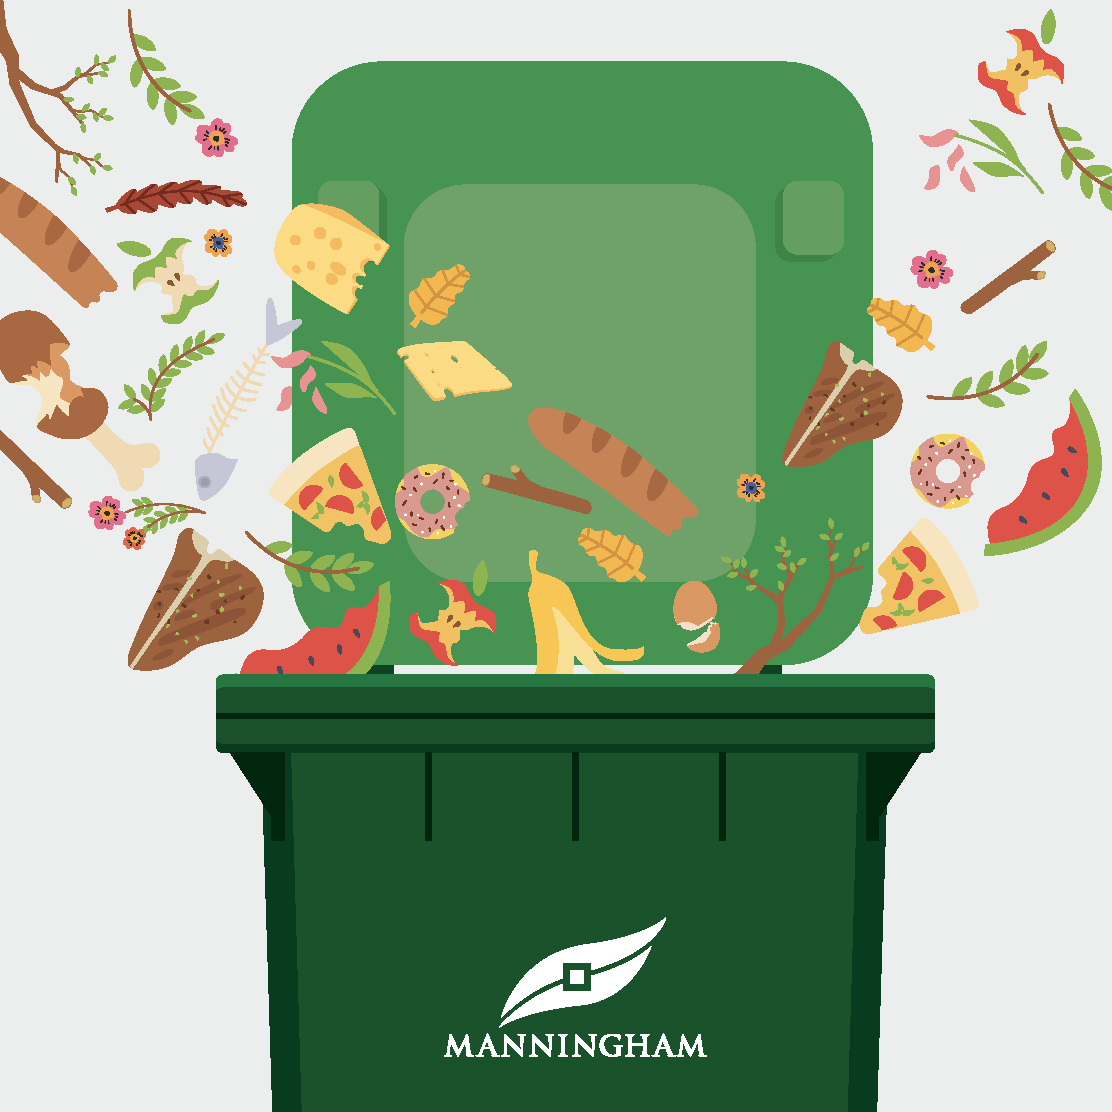 Food and garden waste flowing into garden bin